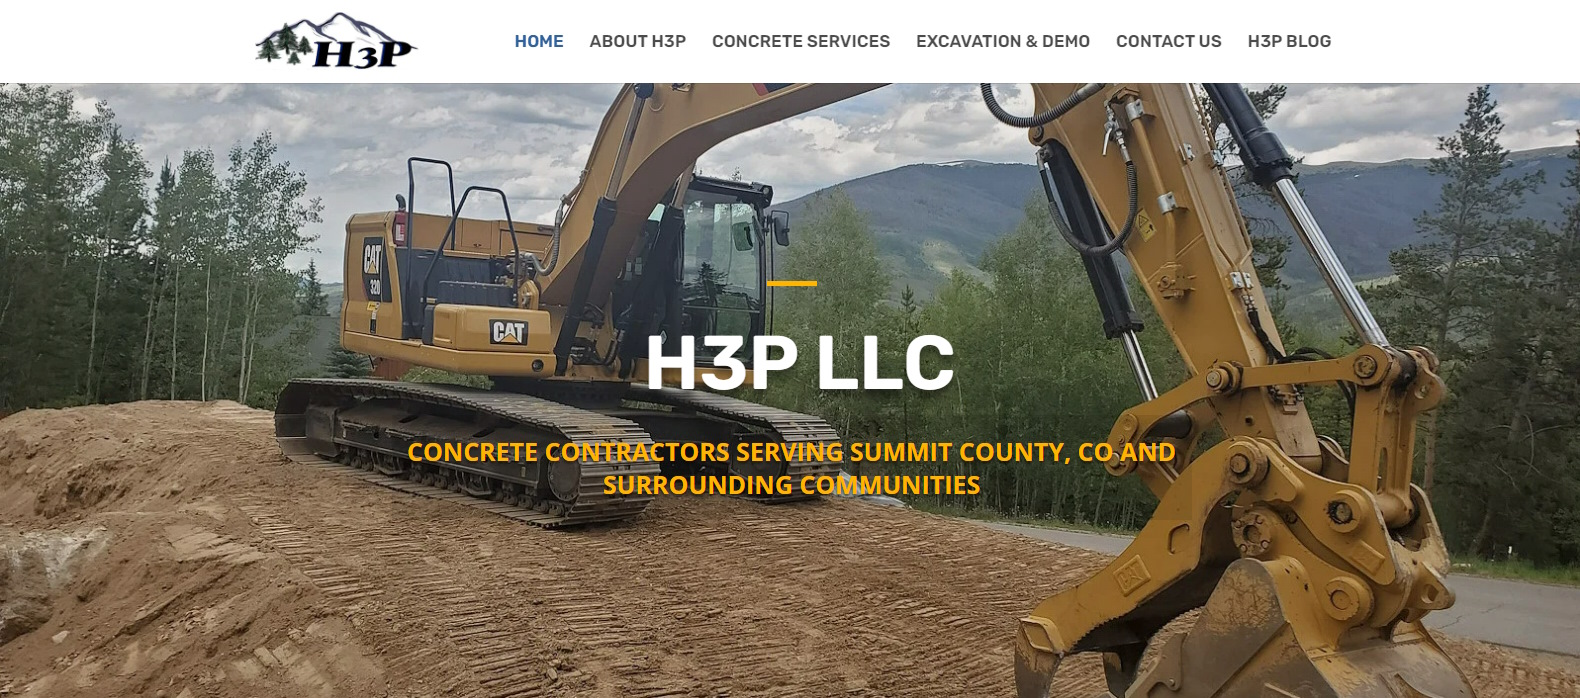 h3p llc summit county concrete company